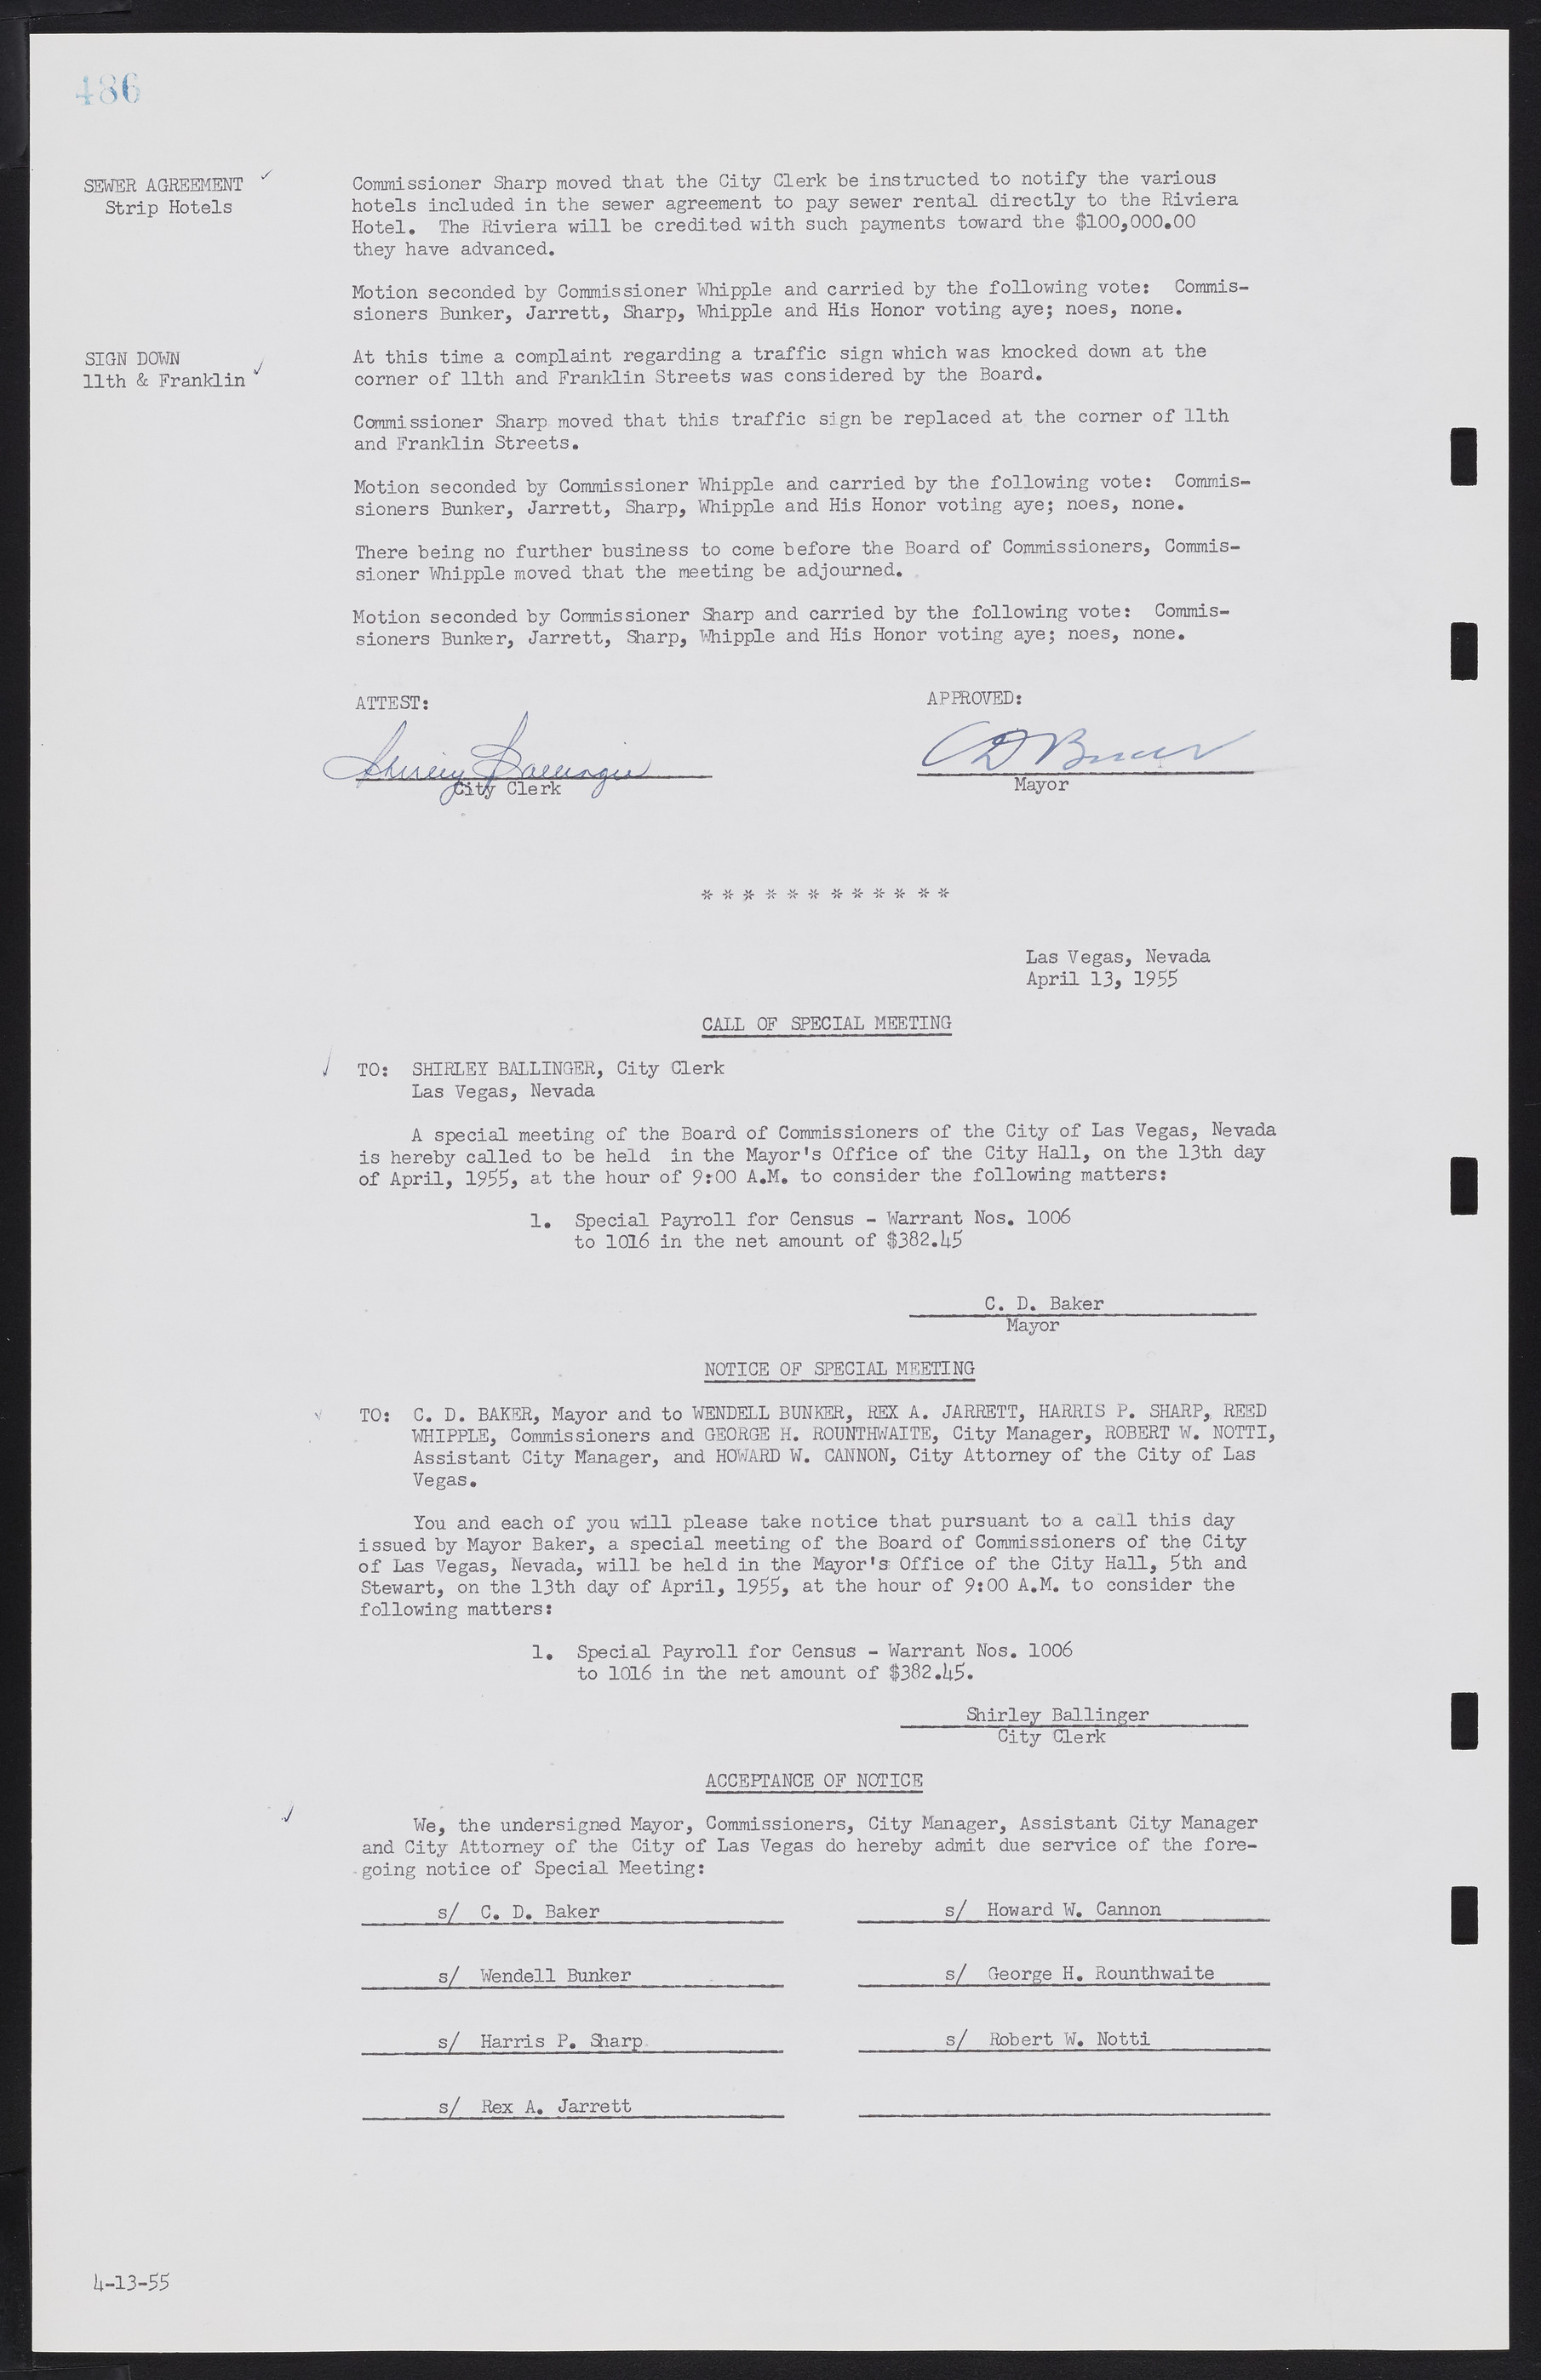 Las Vegas City Commission Minutes, February 17, 1954 to September 21, 1955, lvc000009-492